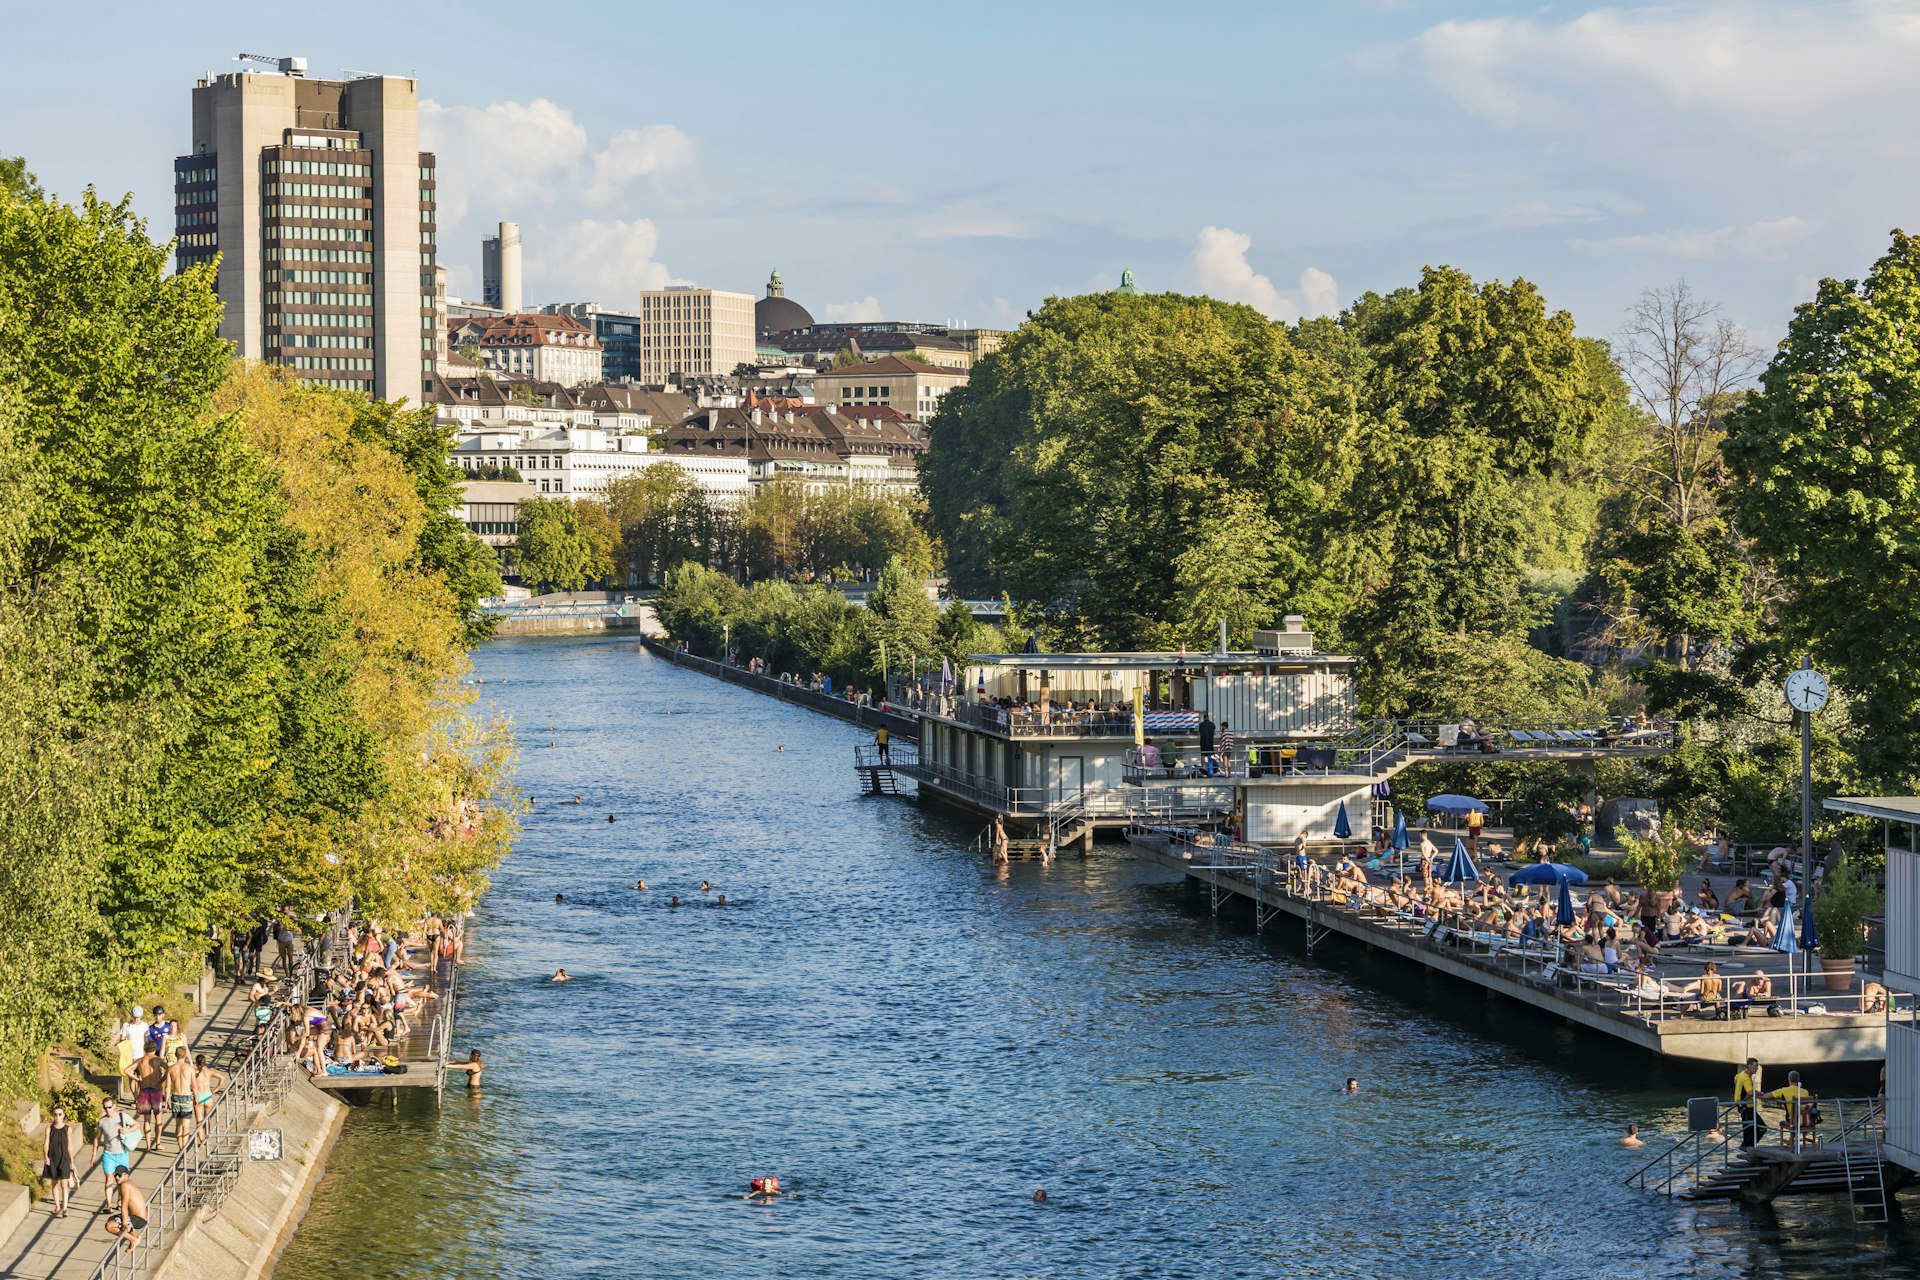 People sunbathe on decking or swim in the river that runs through Zurich